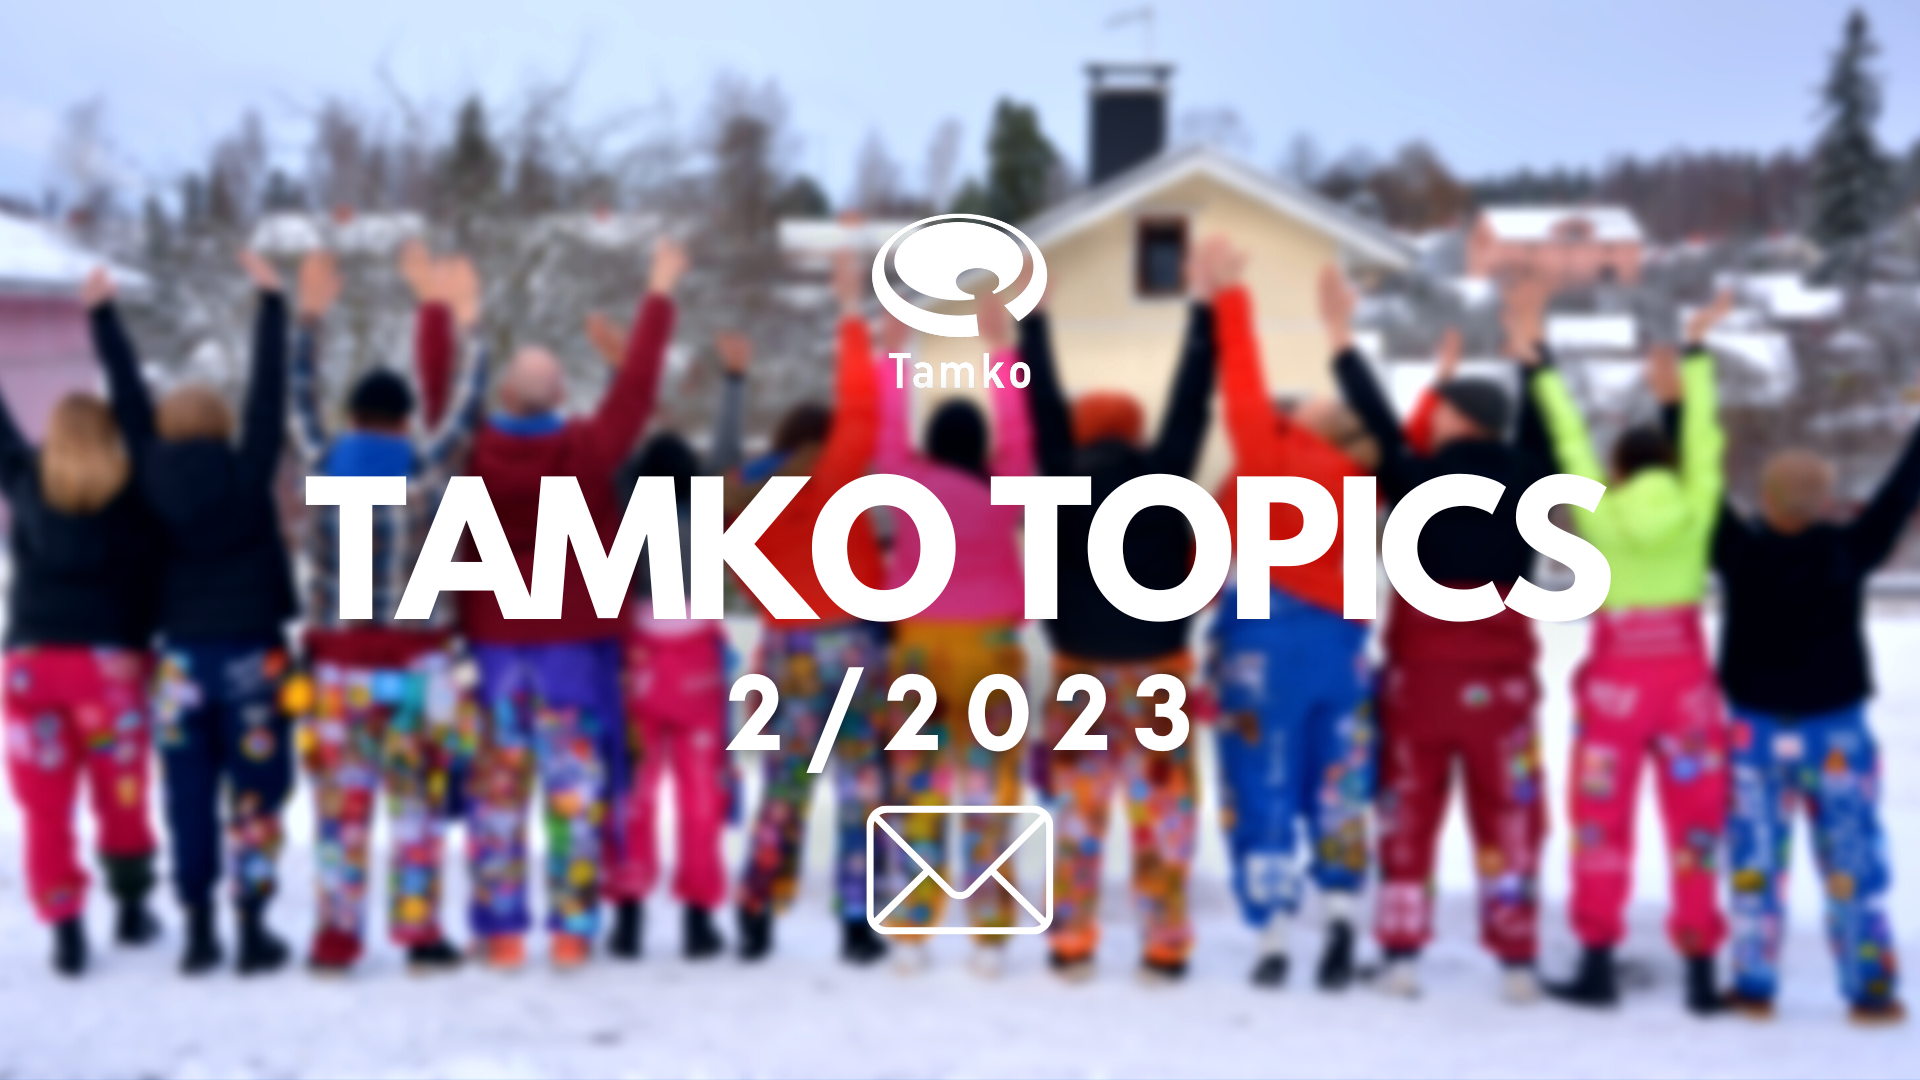 Tamko Topics 2/2023